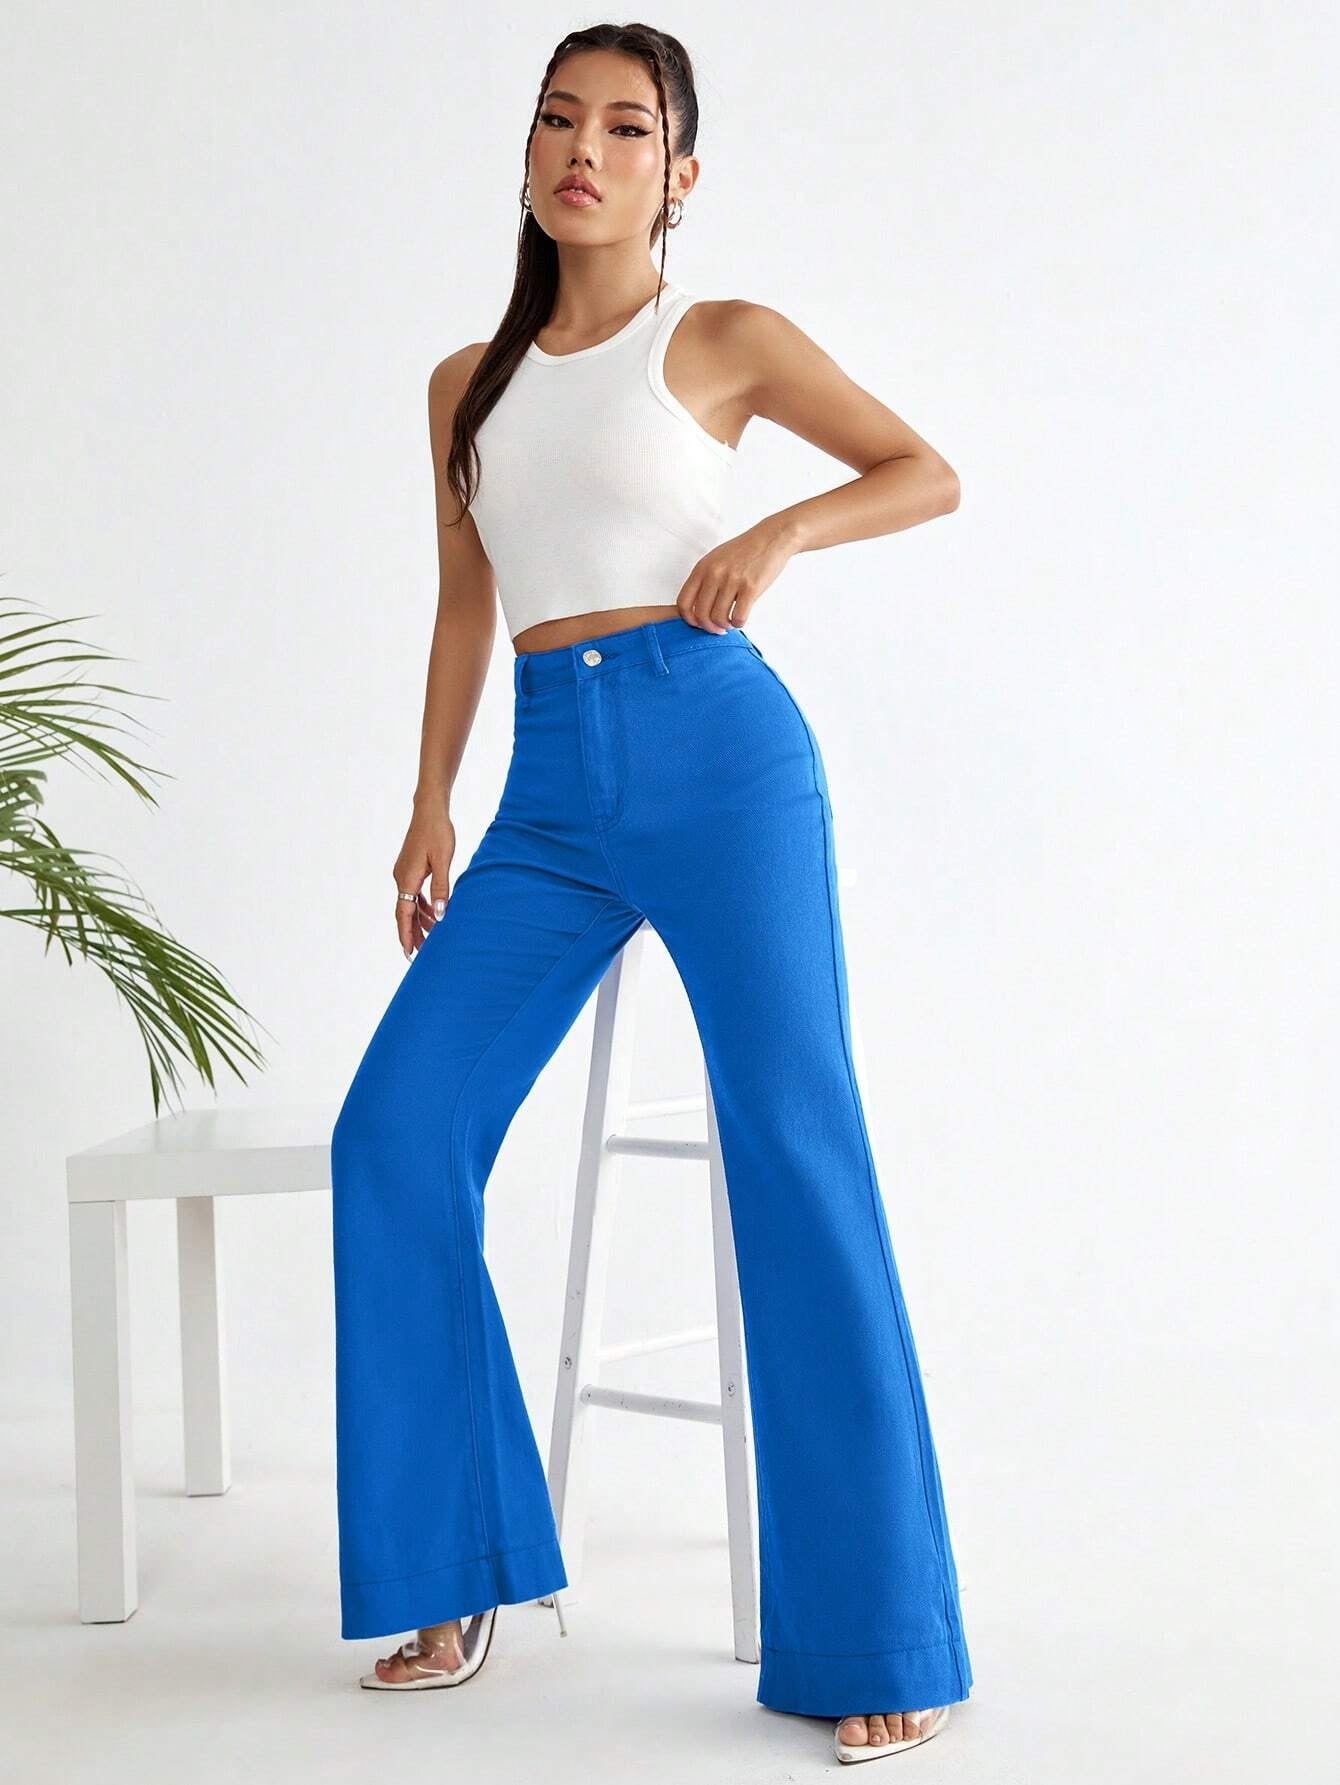 CM-BS759005 Women Preppy Seoul Style High Waist Flare Leg Jeans - Blue